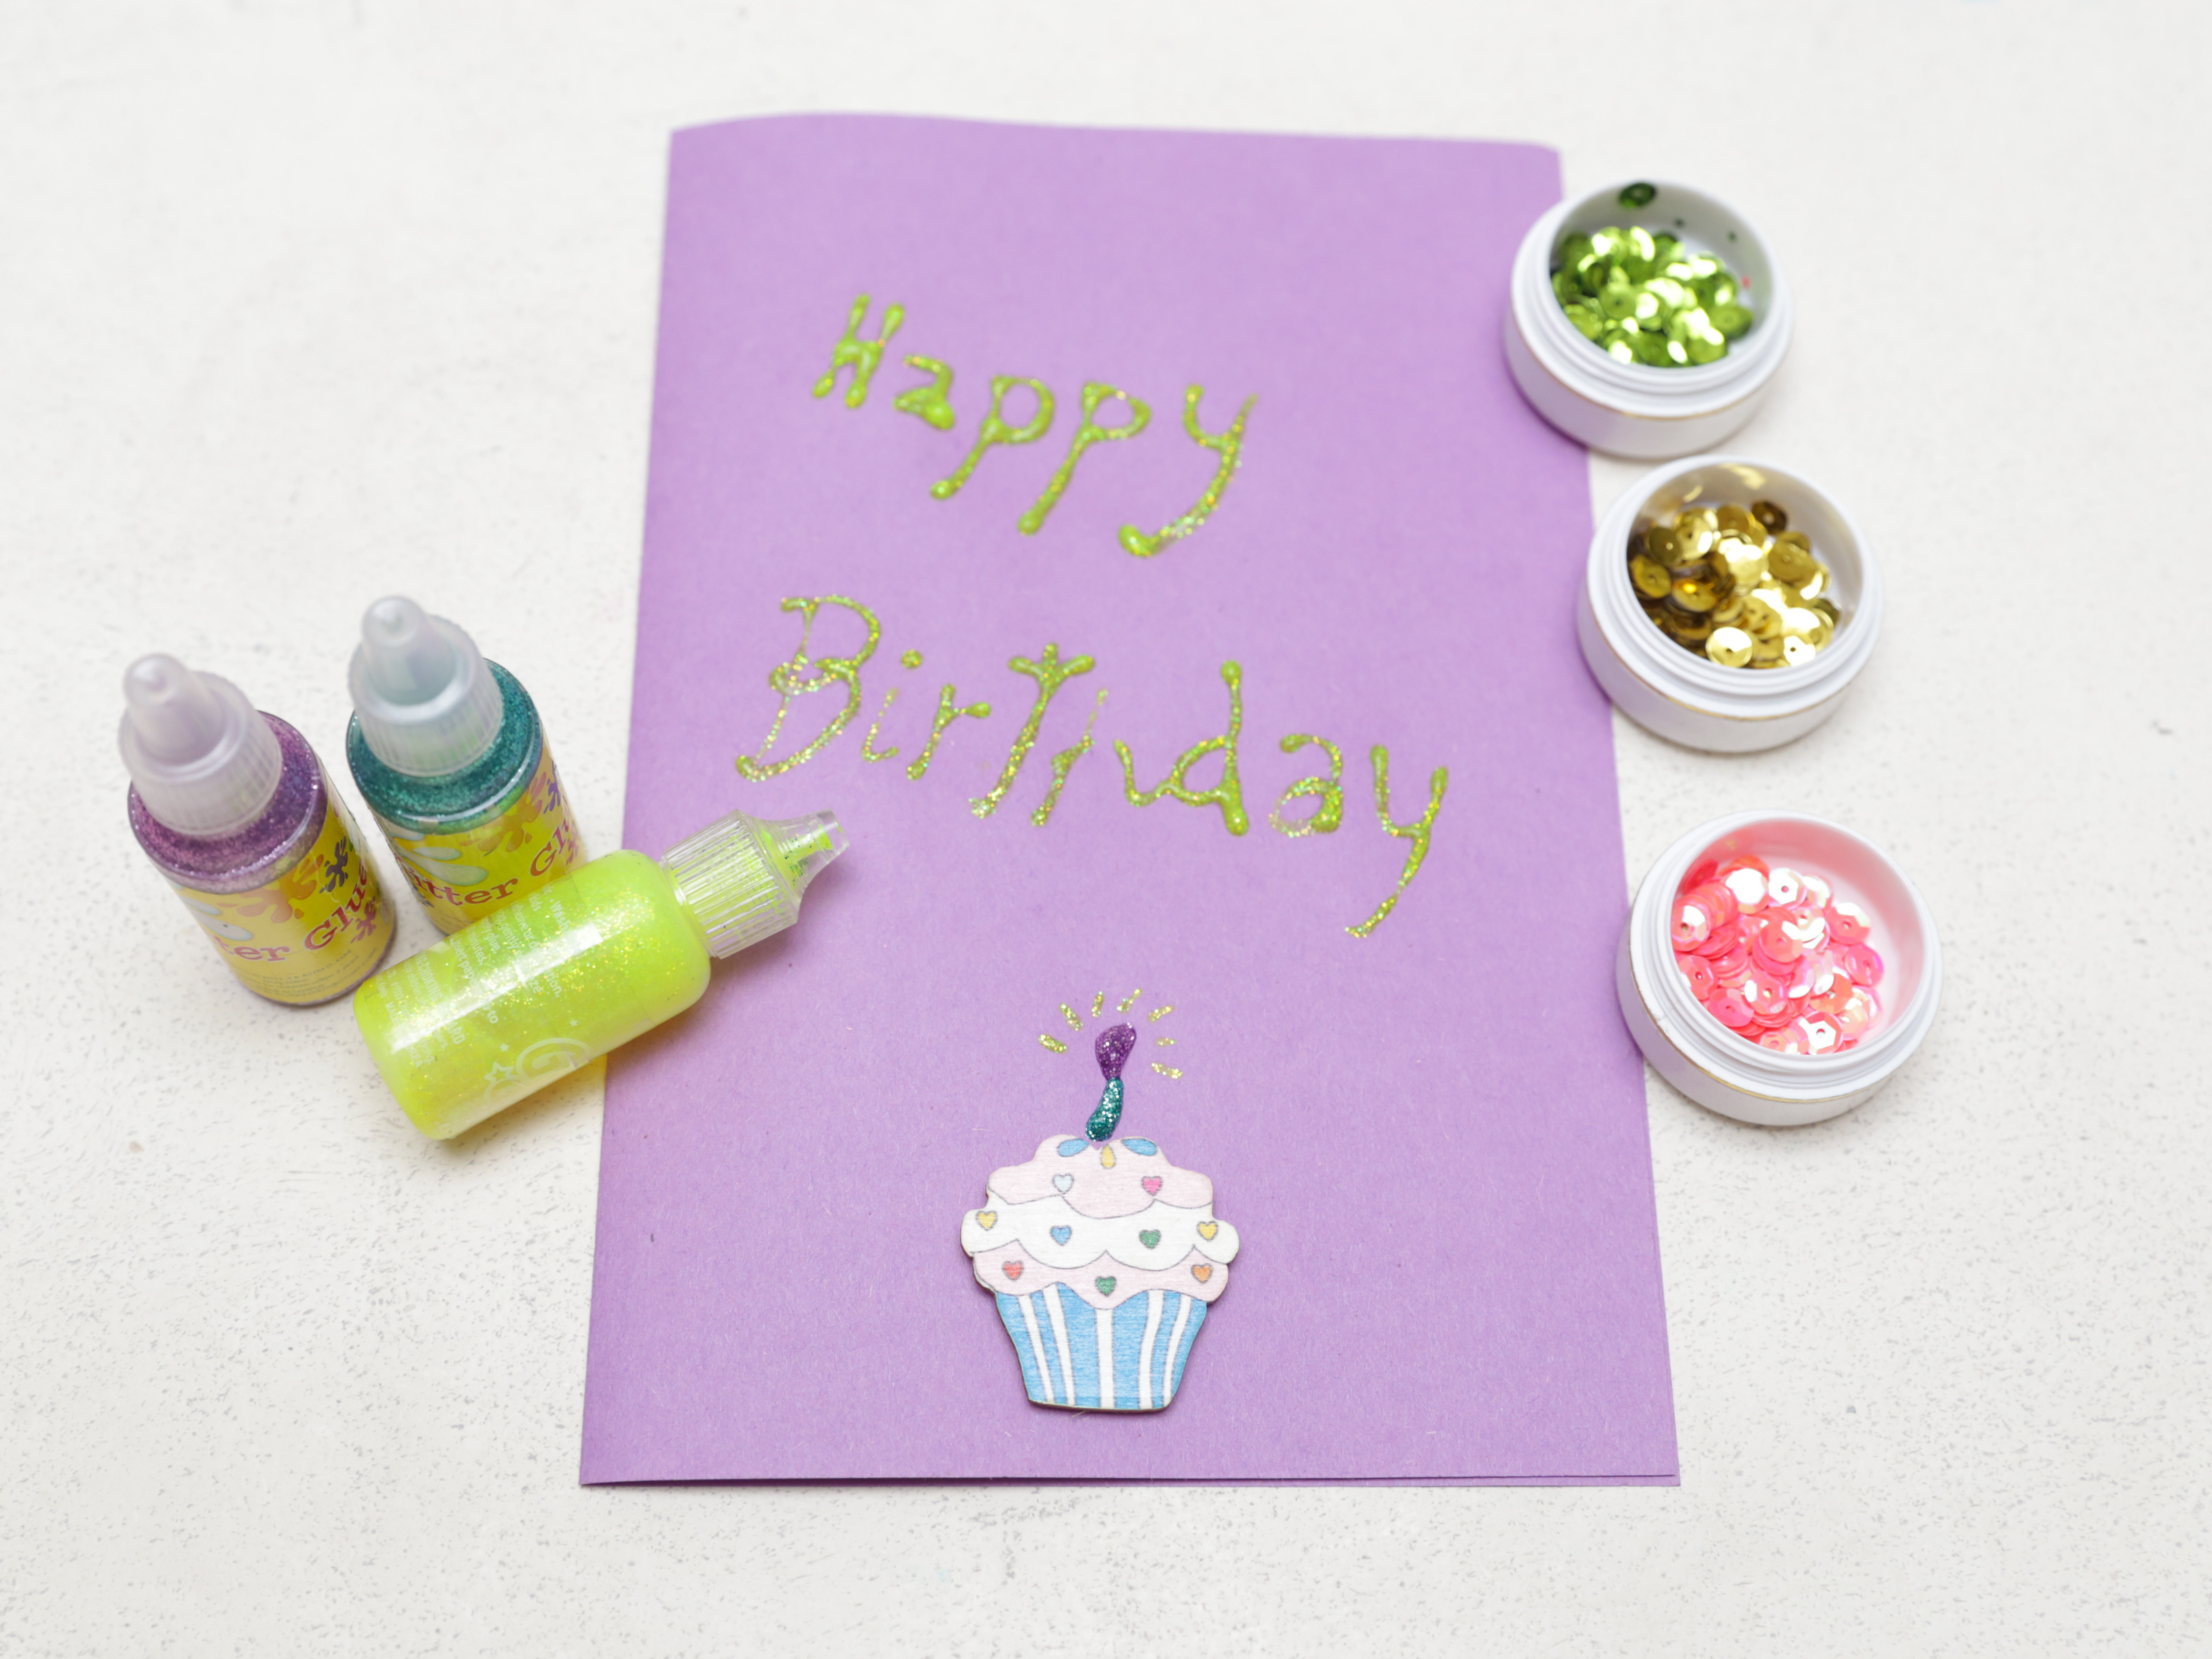 Cool Easy Birthday Card Ideas How To Make A Simple Handmade Birthday Card 15 Steps